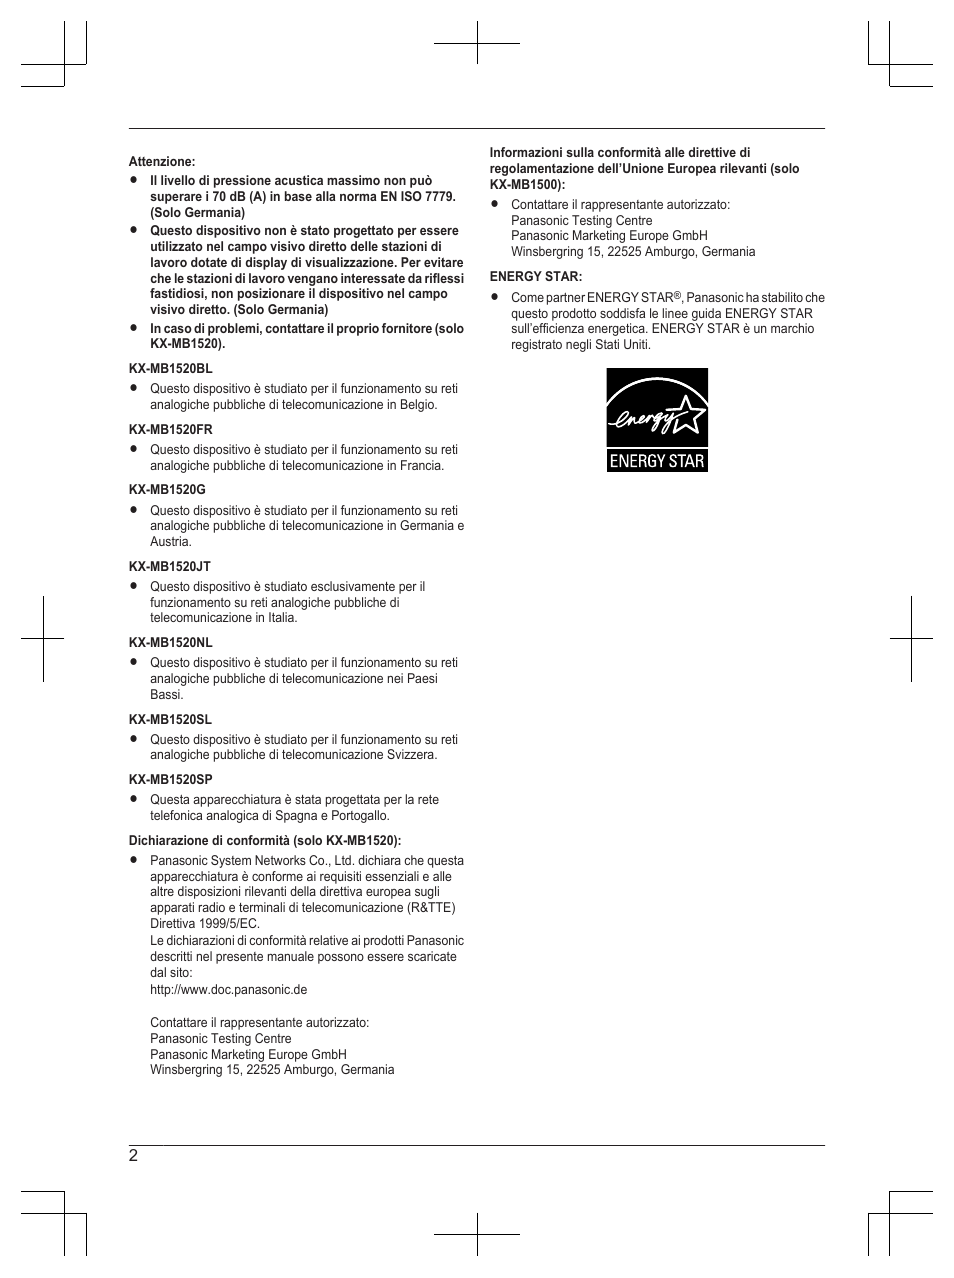 Panasonic KXMB1520JT Manuale d'uso | Pagina 2 / 8